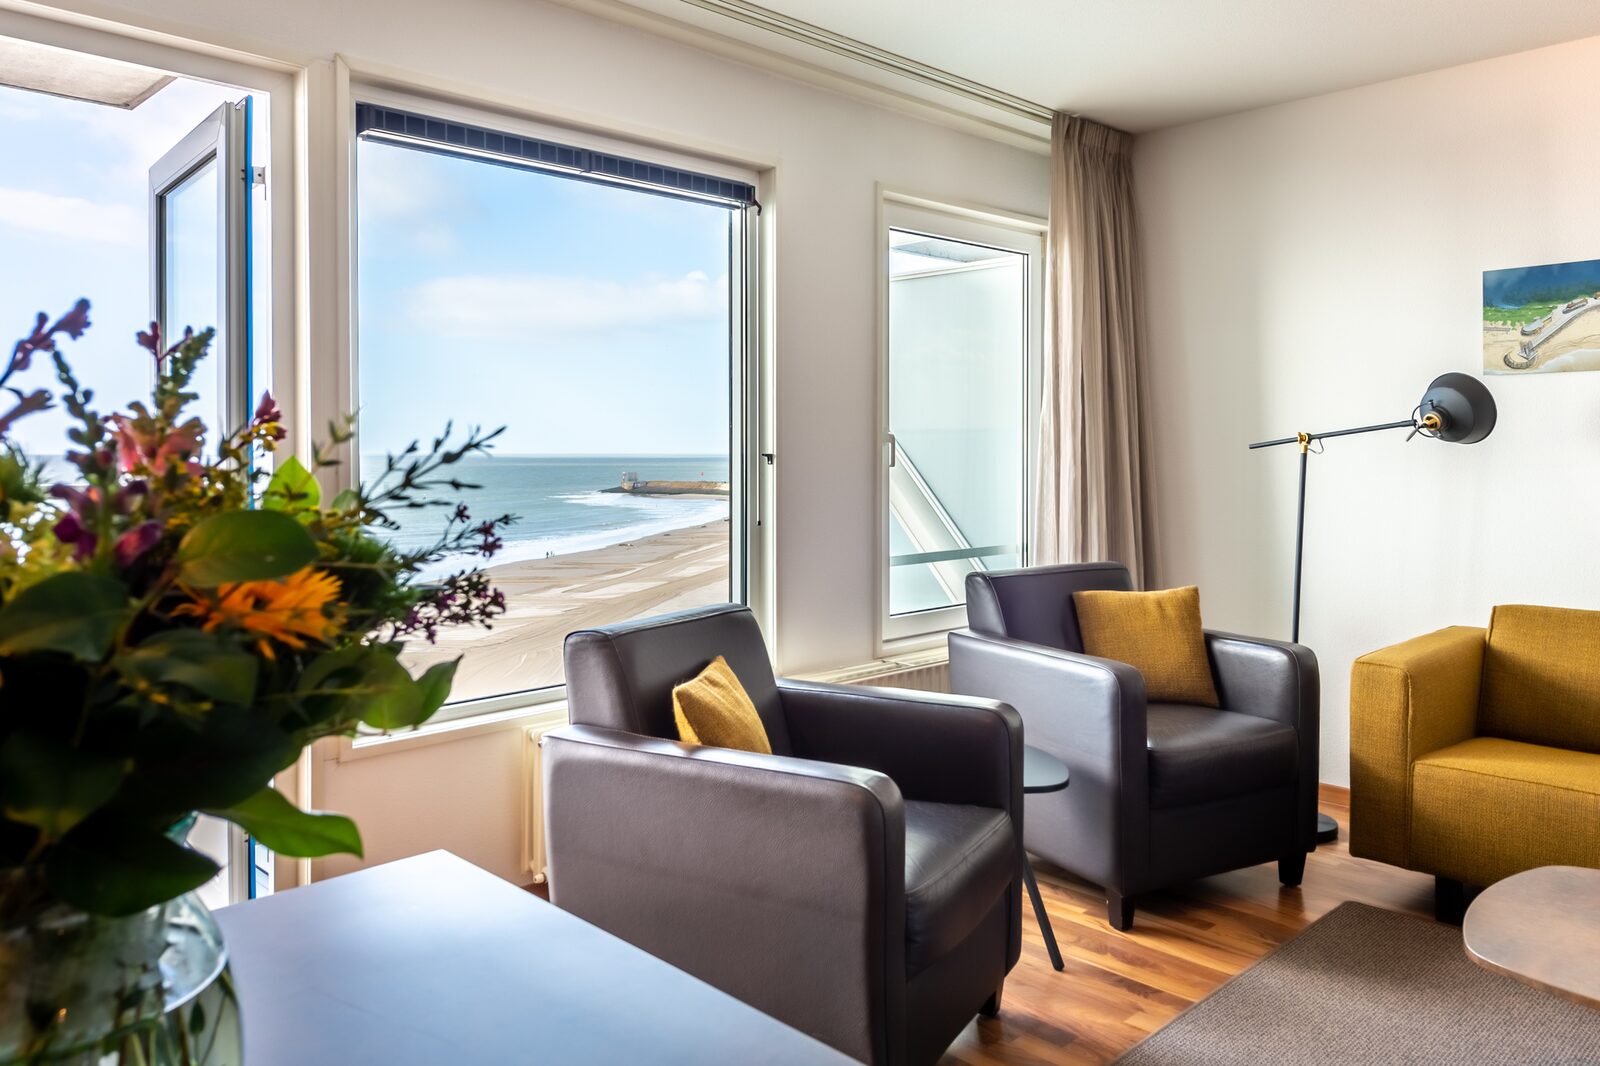 3-room between apartment with ocean view